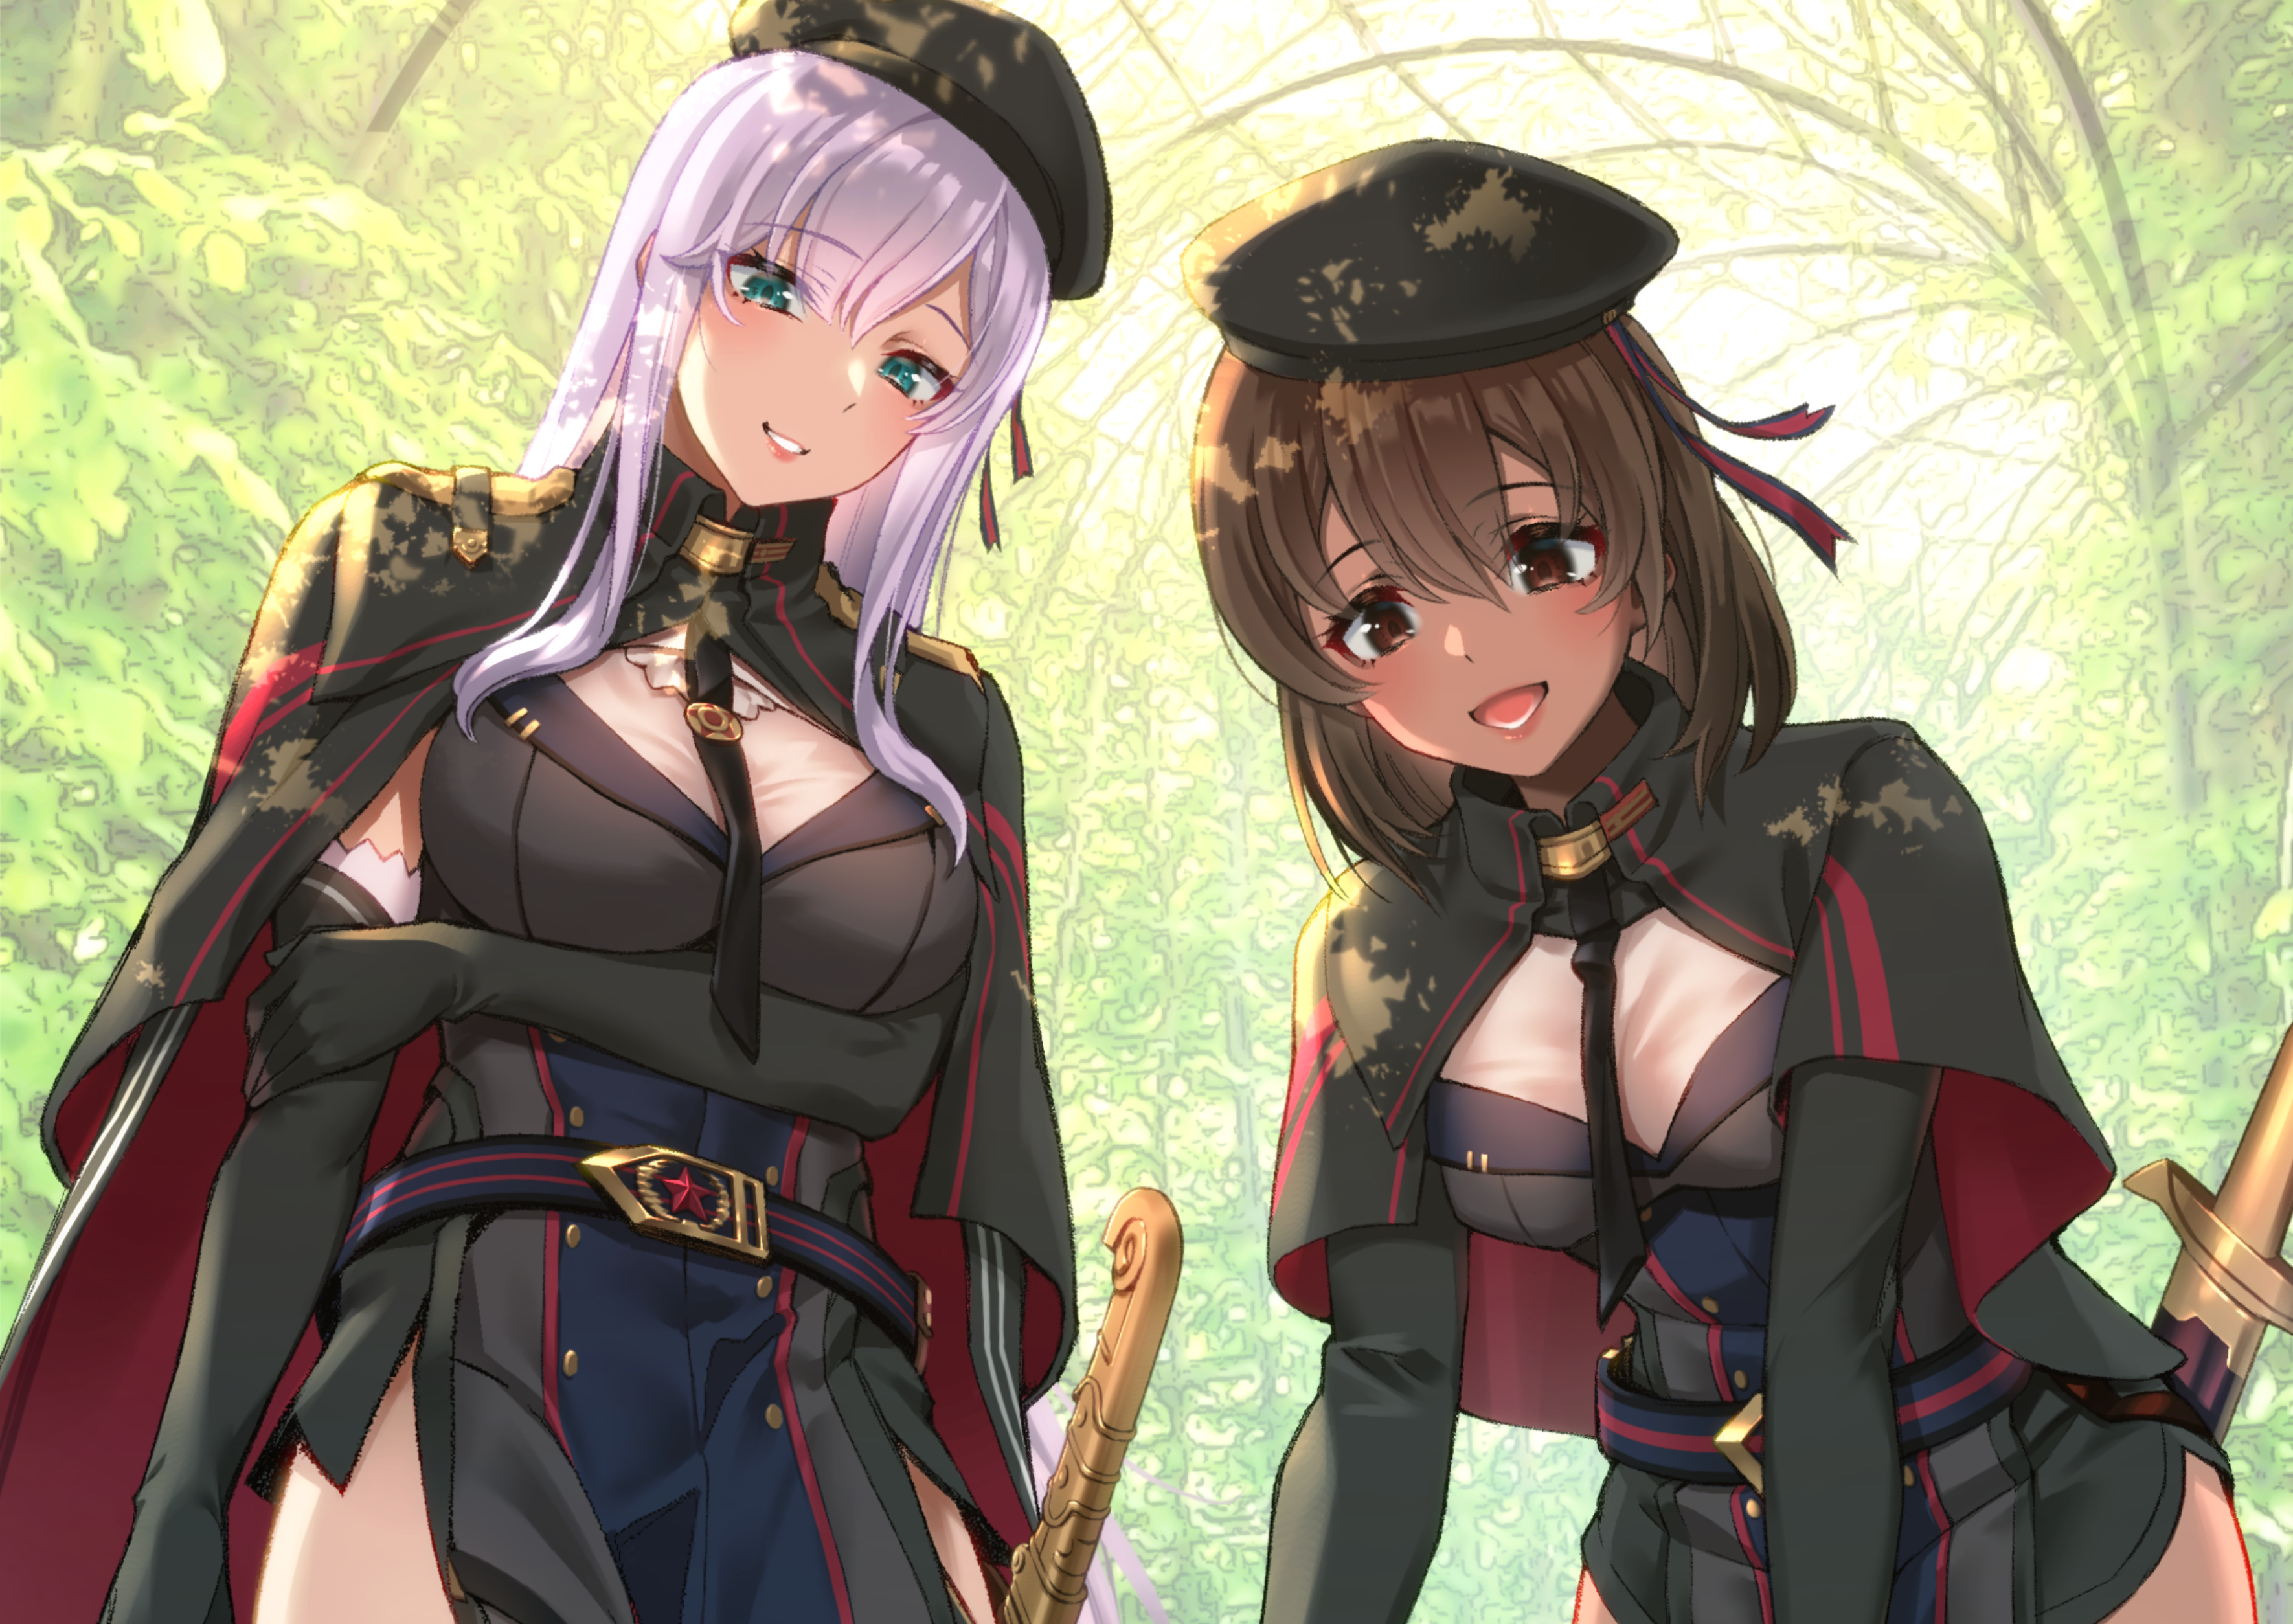 Anime 3541x2508 weapon military uniform anime girls hat uniform